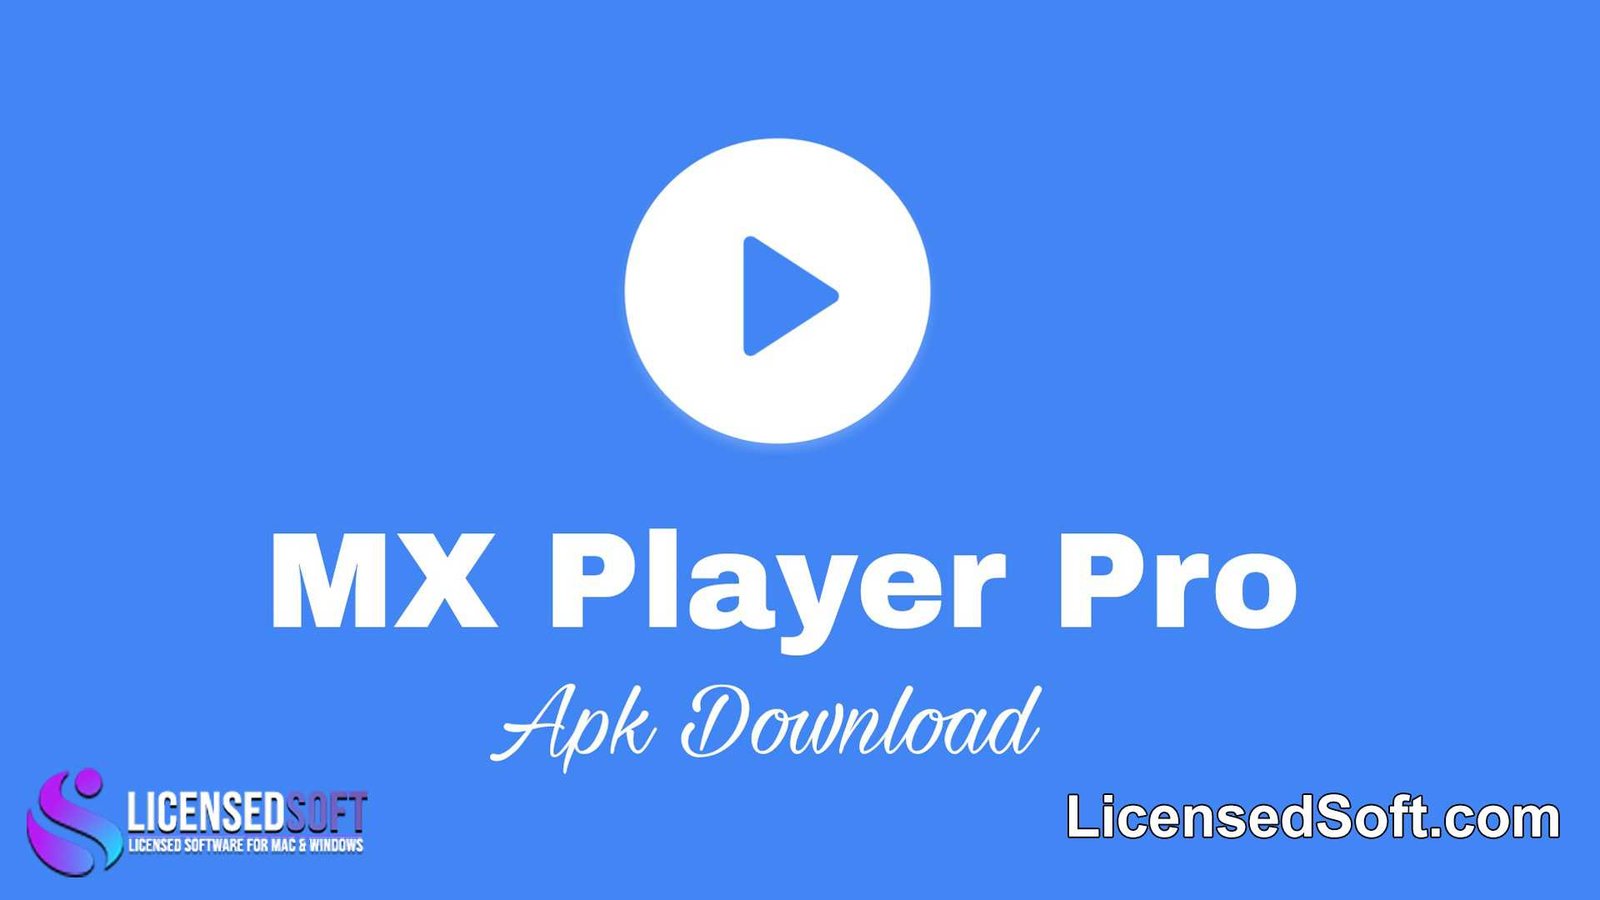 MX Player Pro Premium Mod Apk Free Download By LicensedSoft